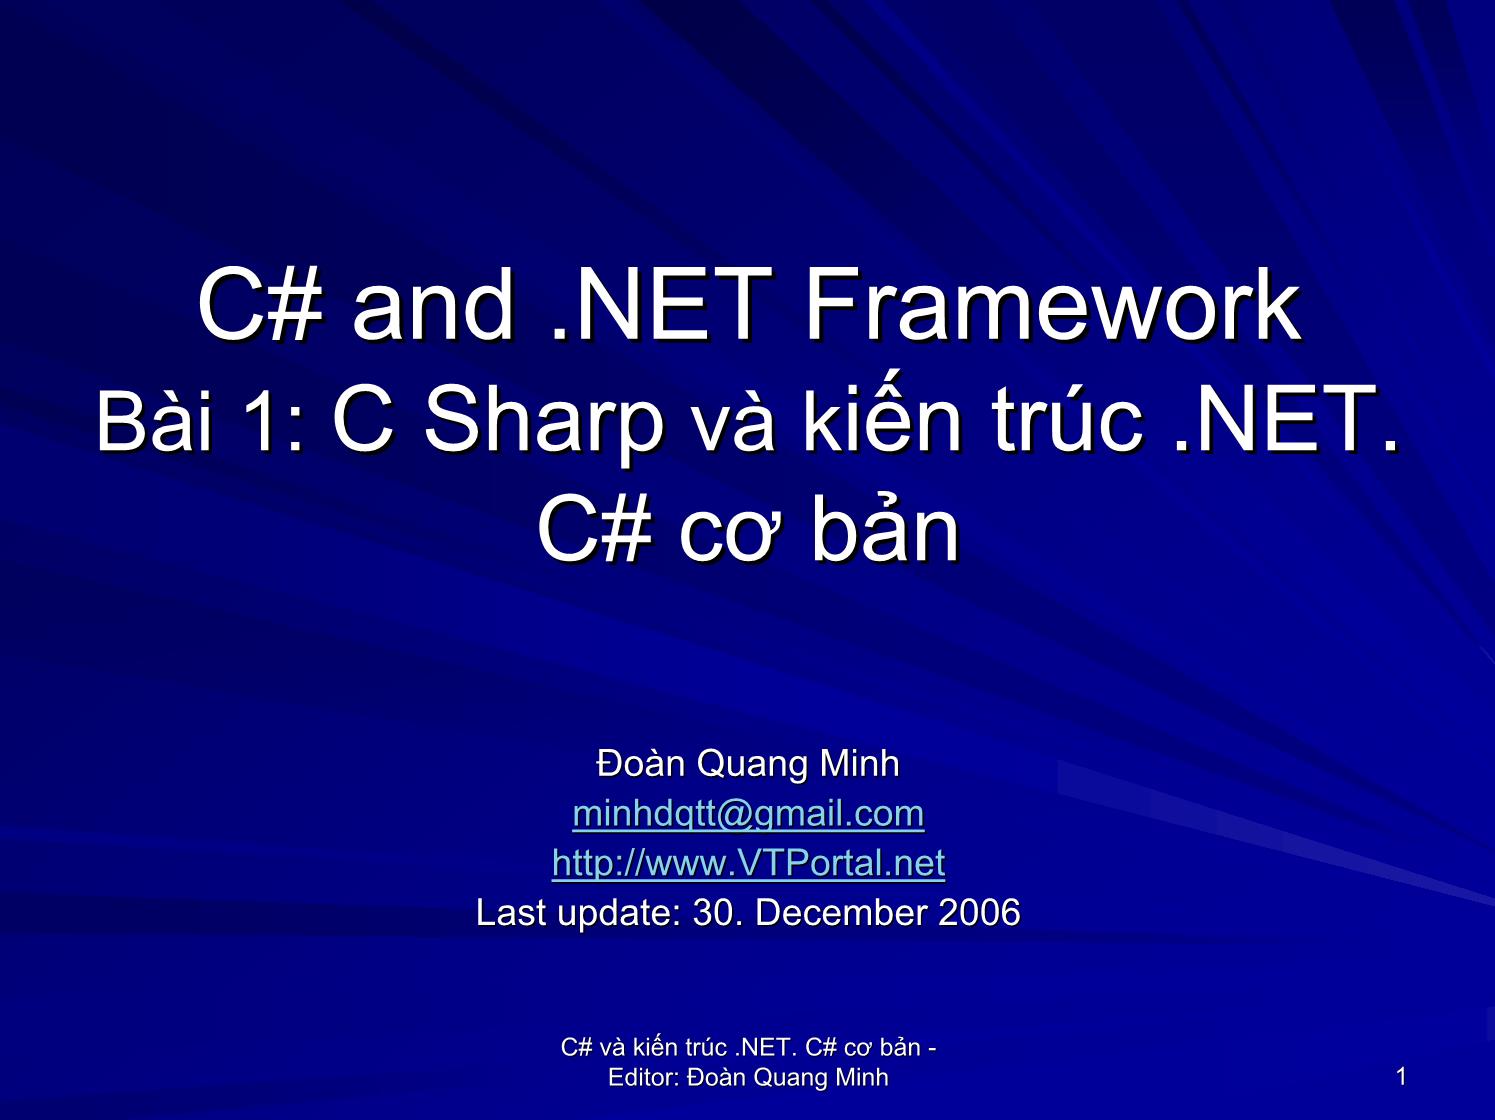 C# and .NET Framework trang 1